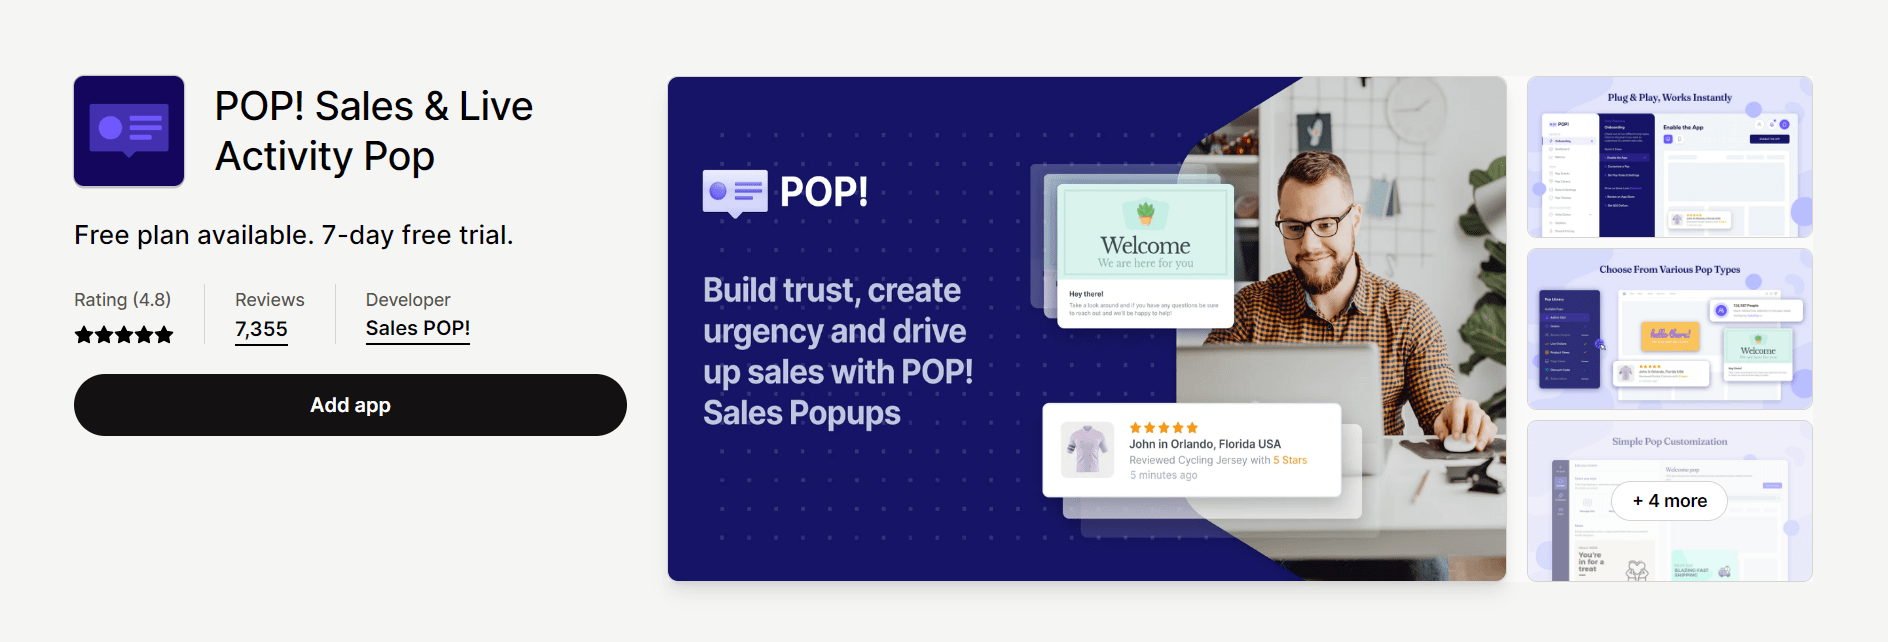 Pop sales Pop up app for Shopify